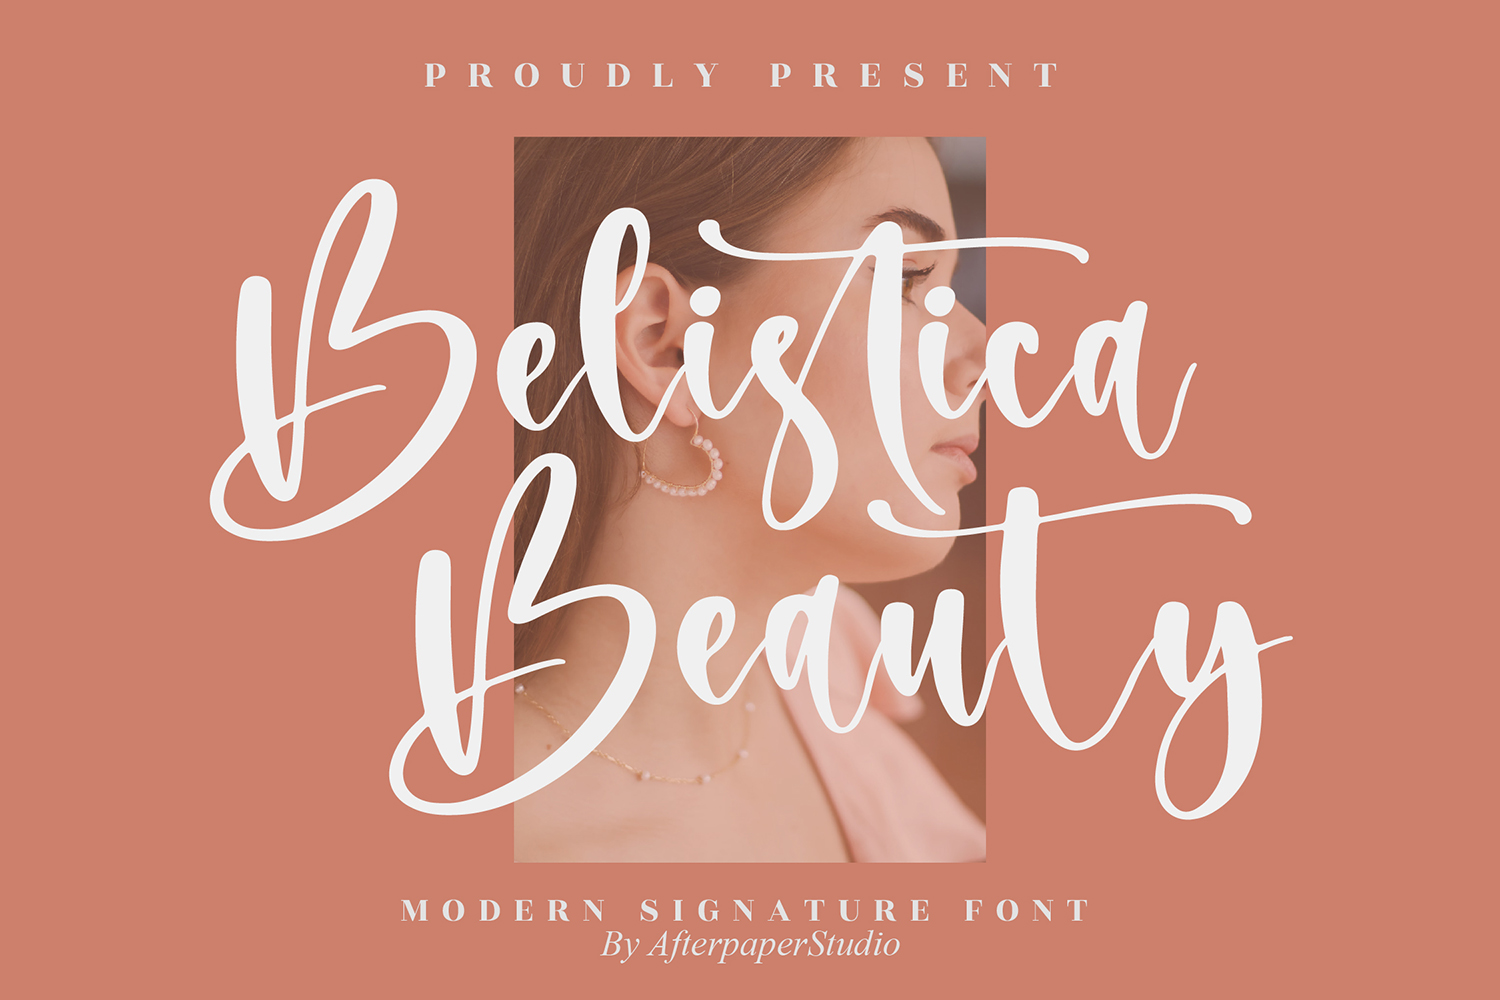 Belistica Beauty Free Font